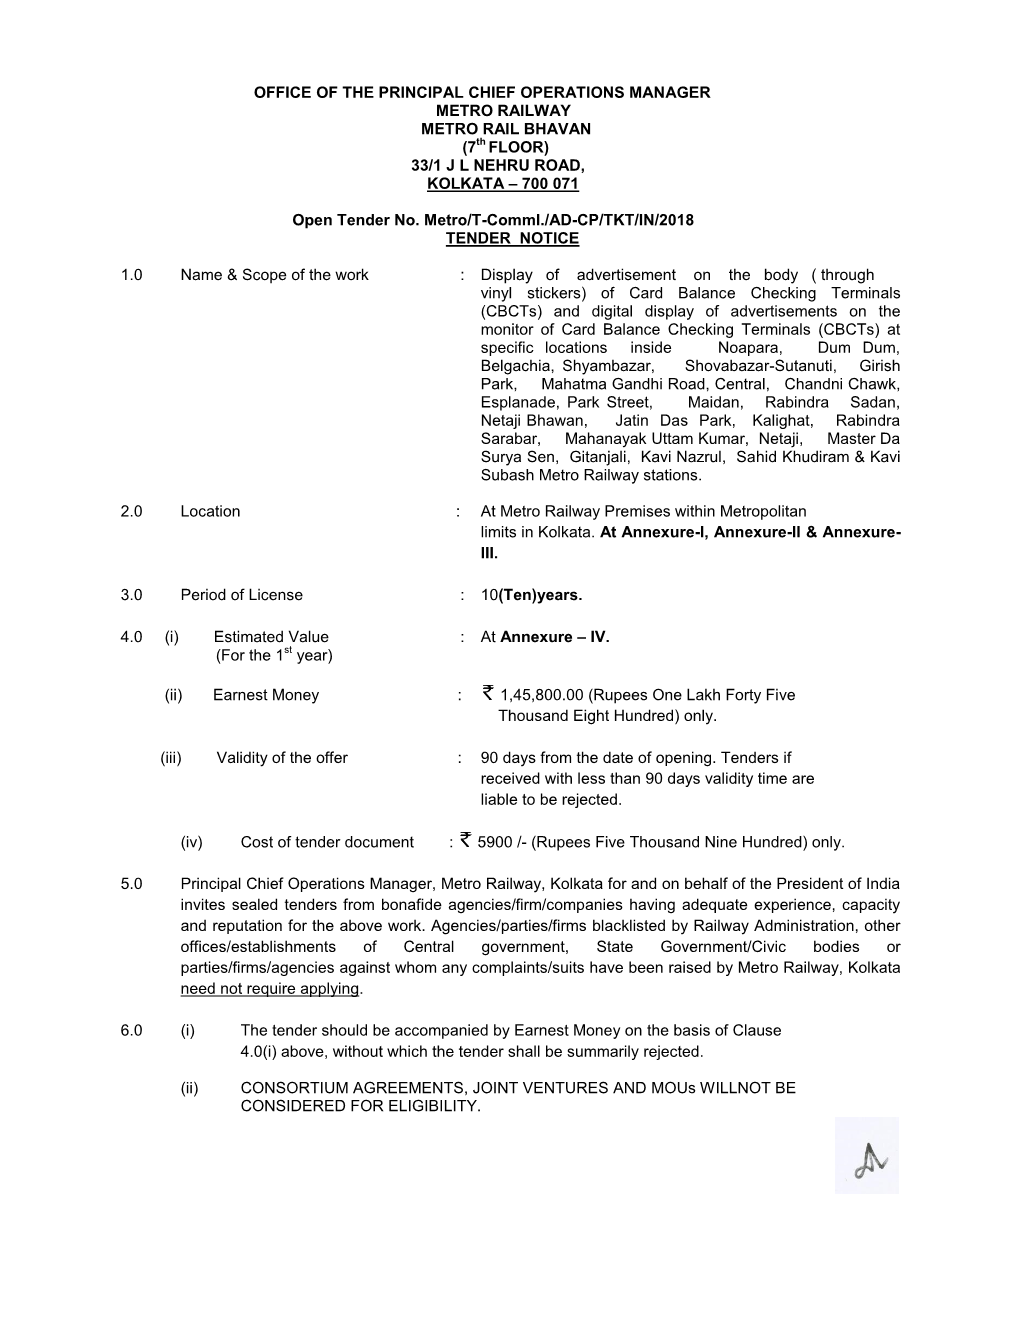 OFFICE of the PRINCIPAL CHIEF OPERATIONS MANAGER METRO RAILWAY METRO RAIL BHAVAN (7Th FLOOR) 33/1 J L NEHRU ROAD, KOLKATA – 700 071